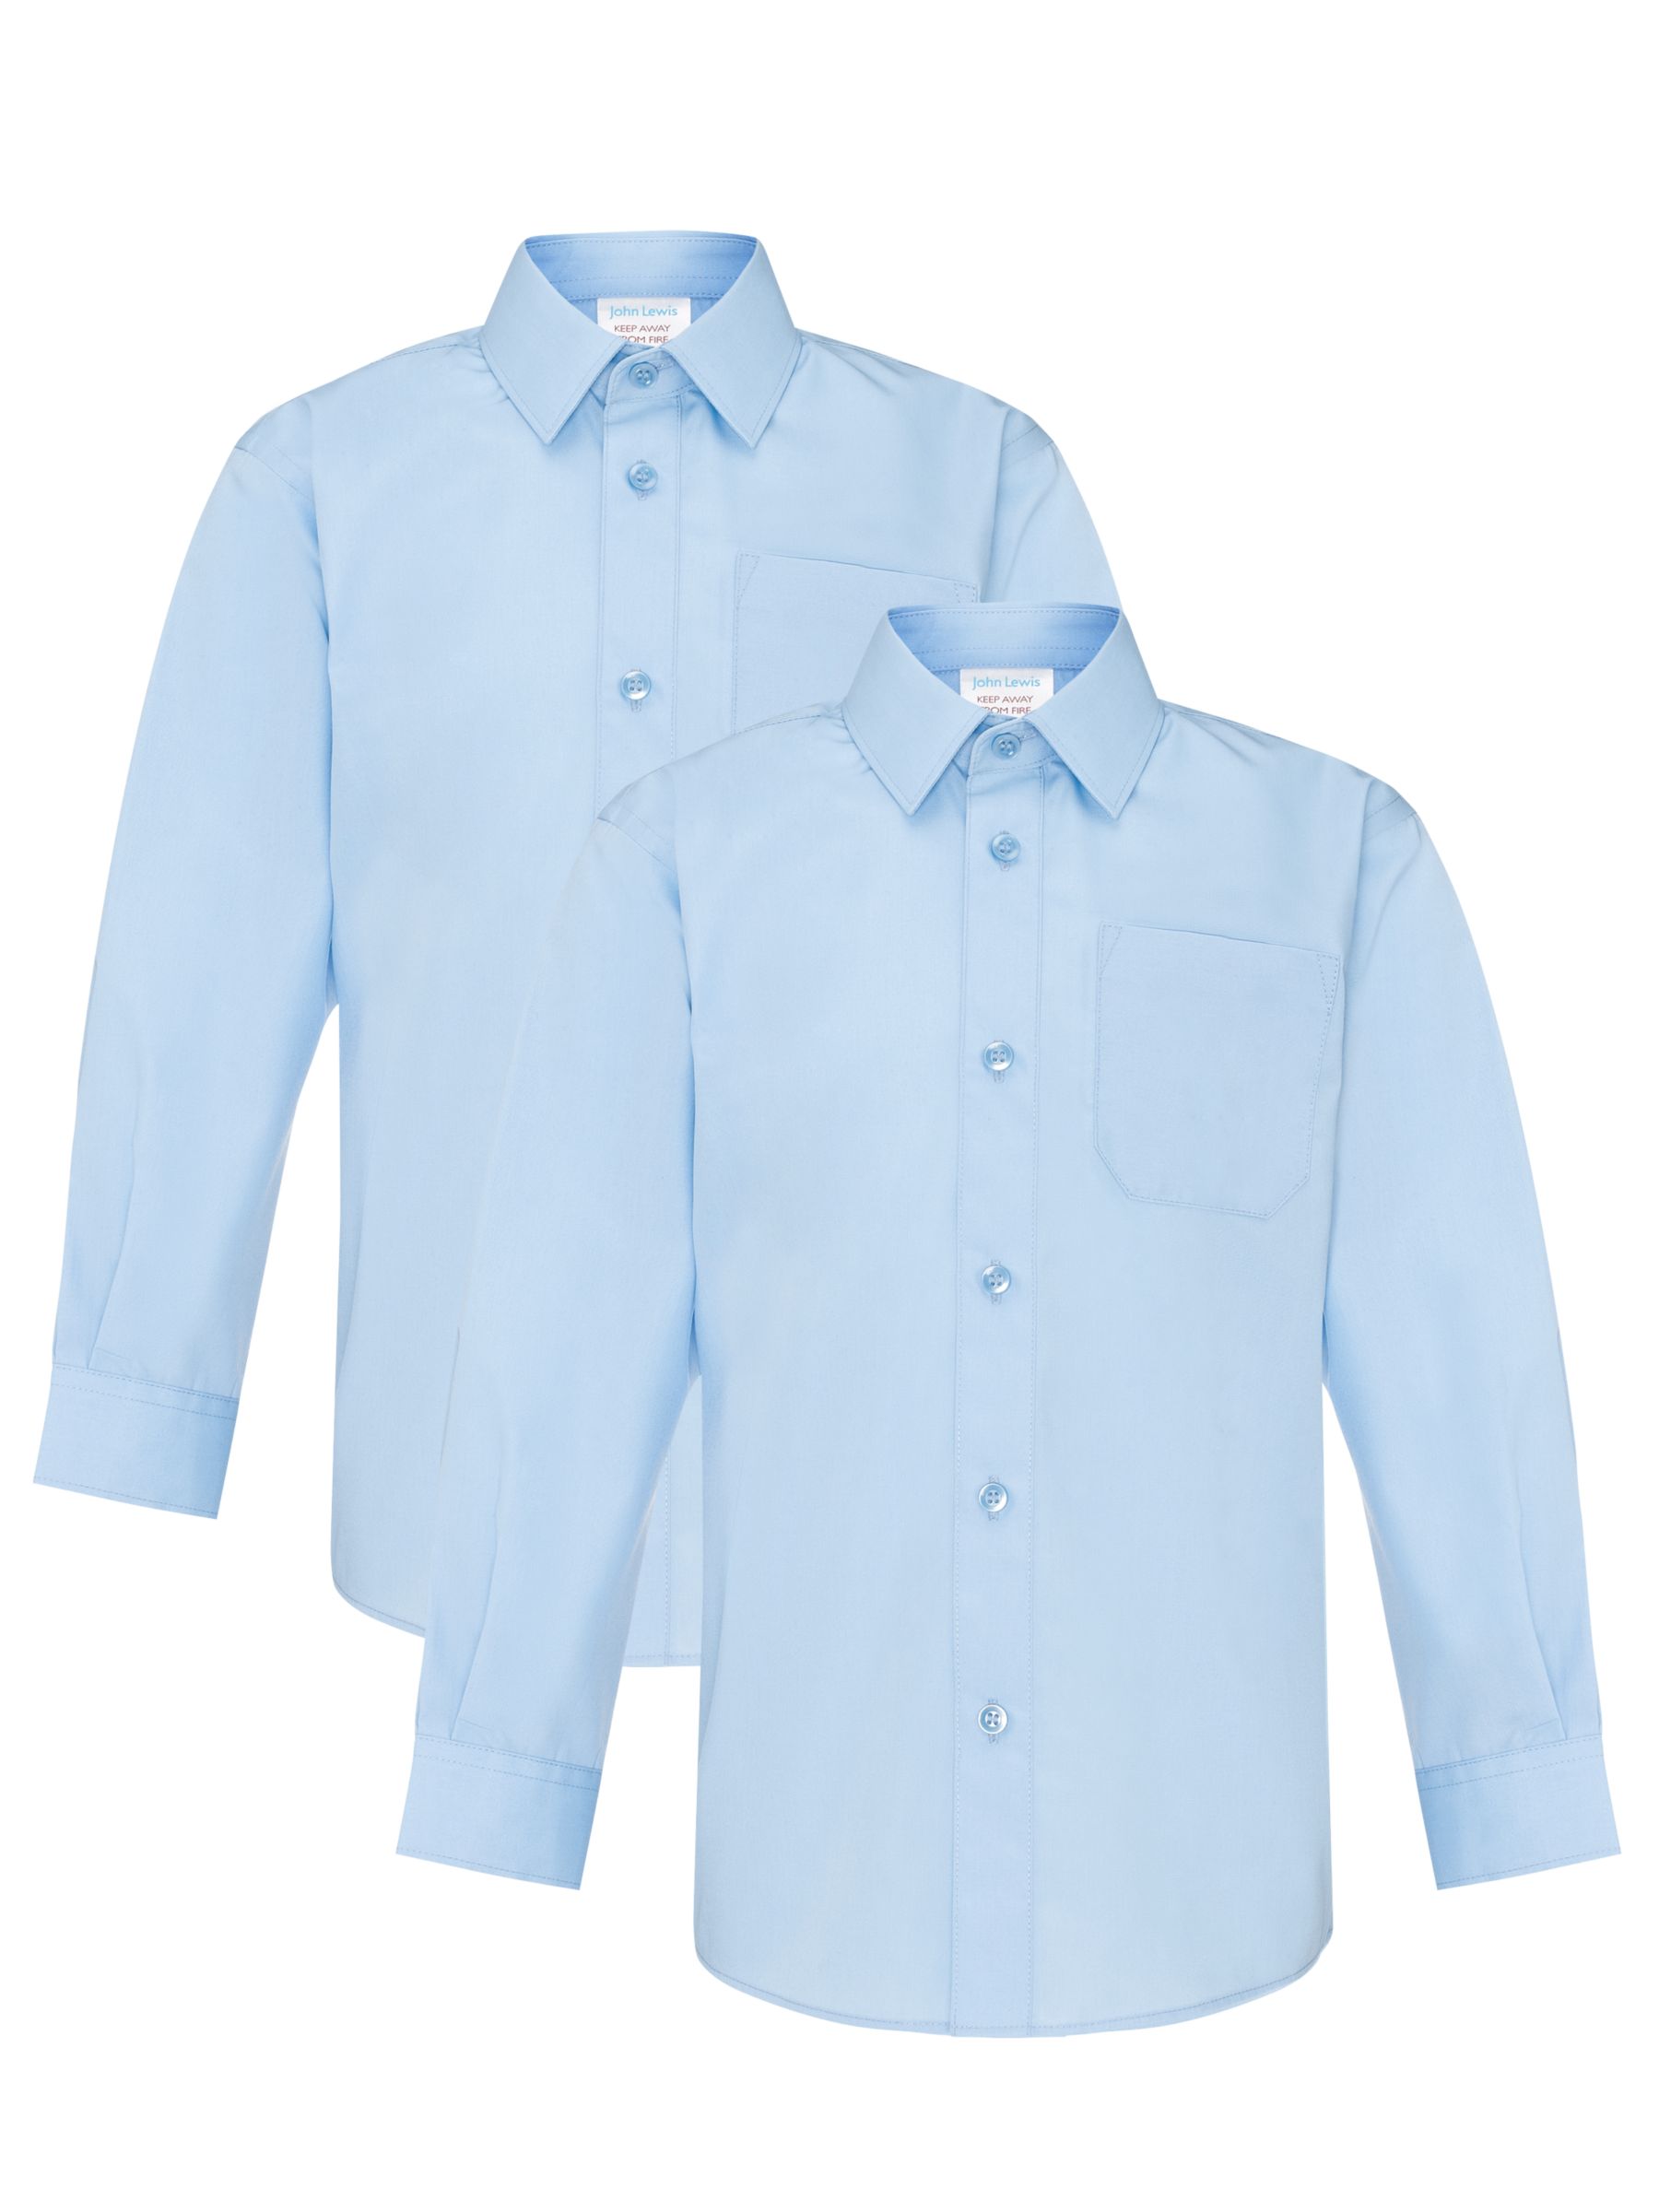 John Lewis & Partners Boys' Long Sleeve Non-Iron School Shirt, Pack of ...